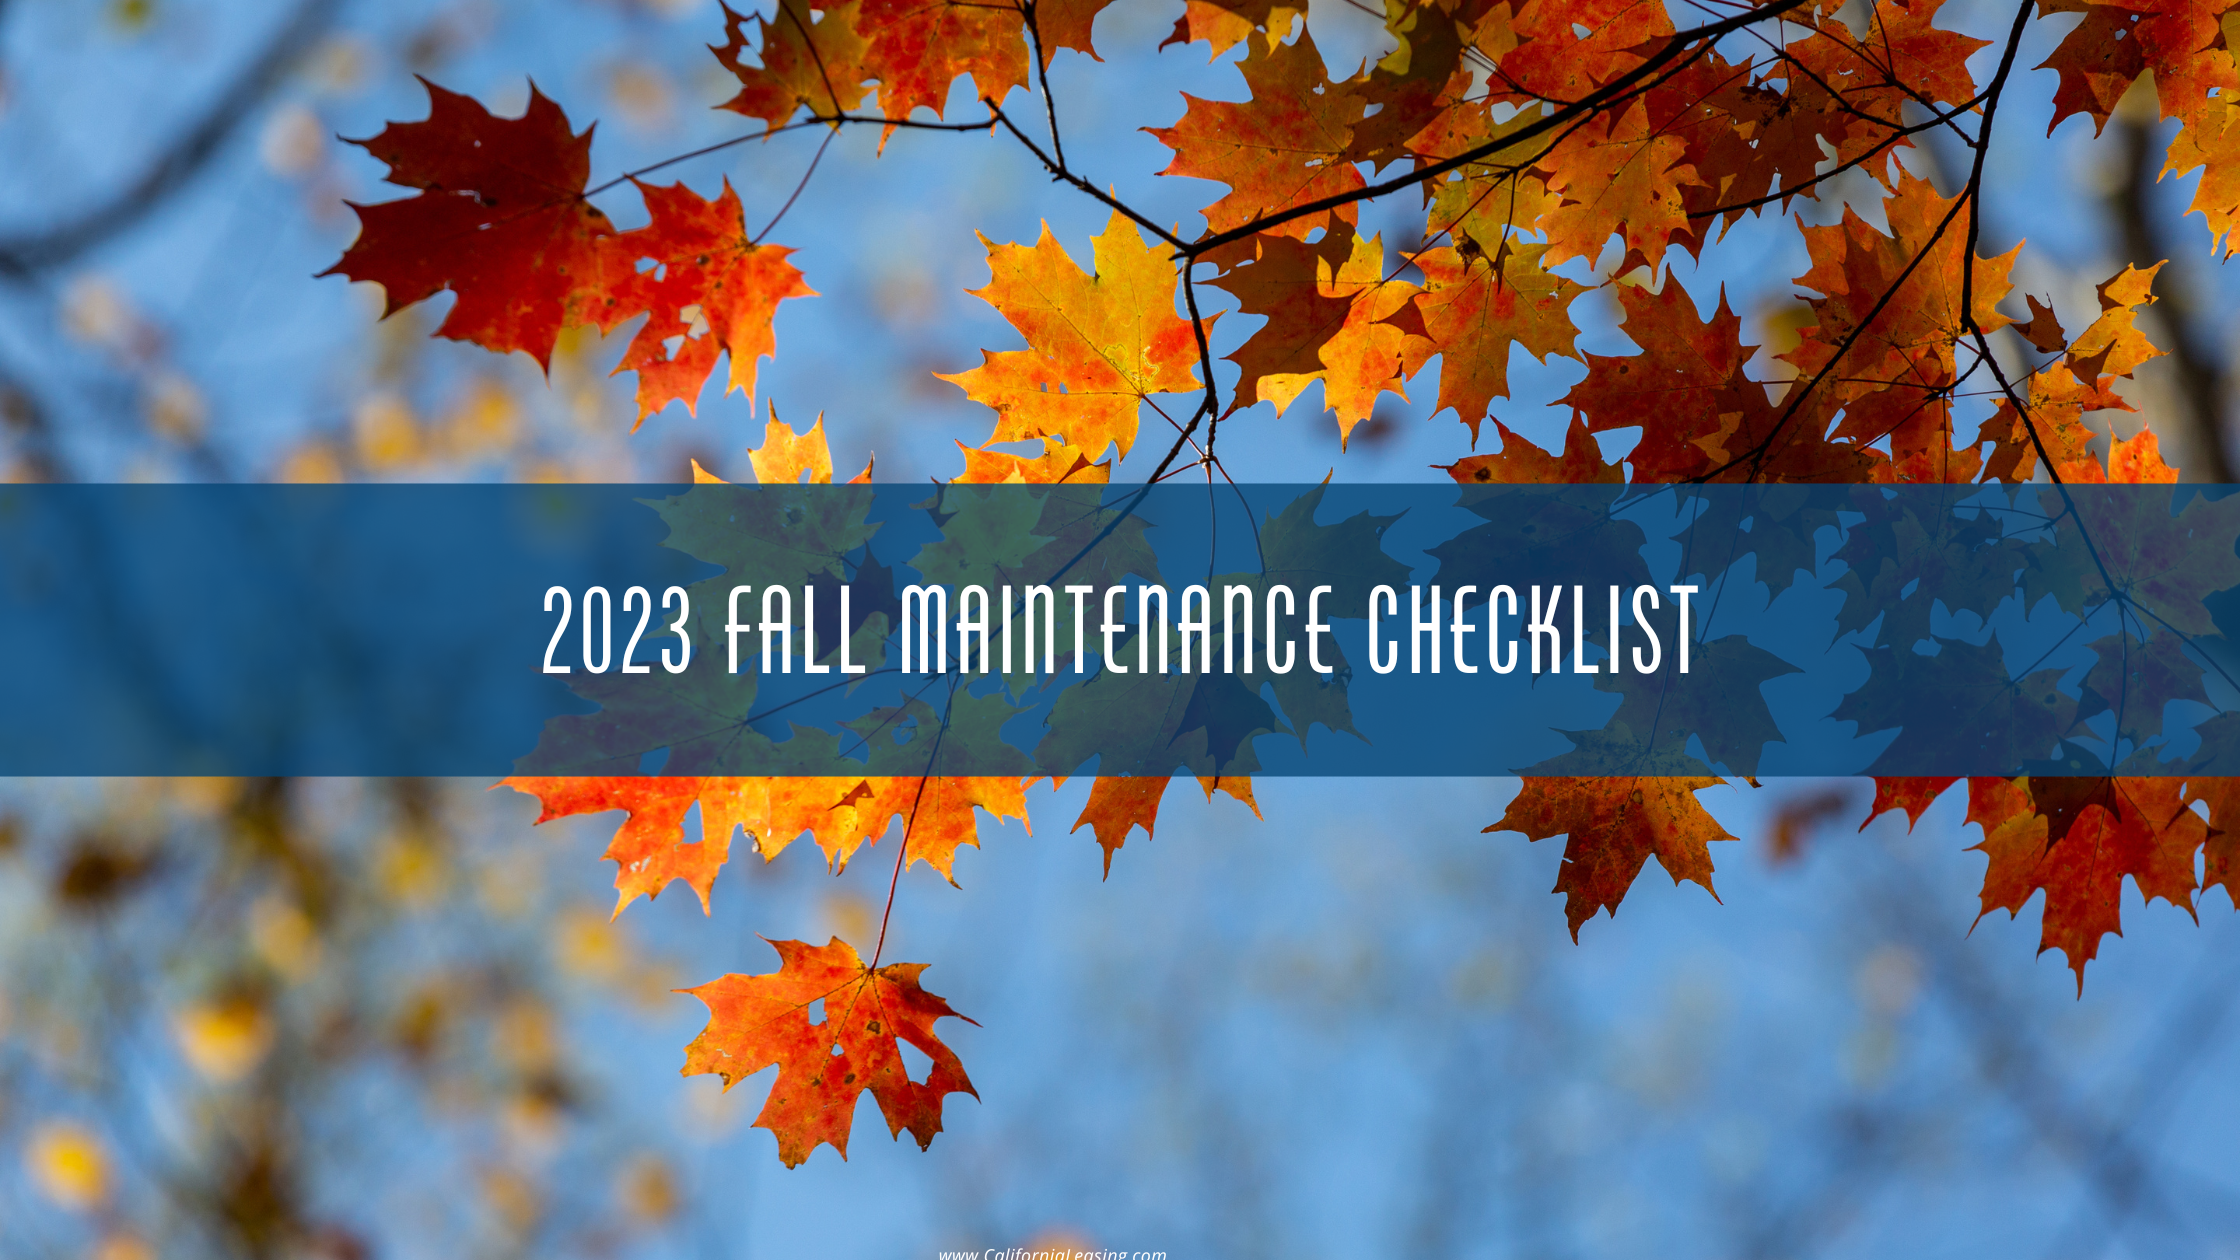 2023 Fall Maintenance Checklist image of leaves